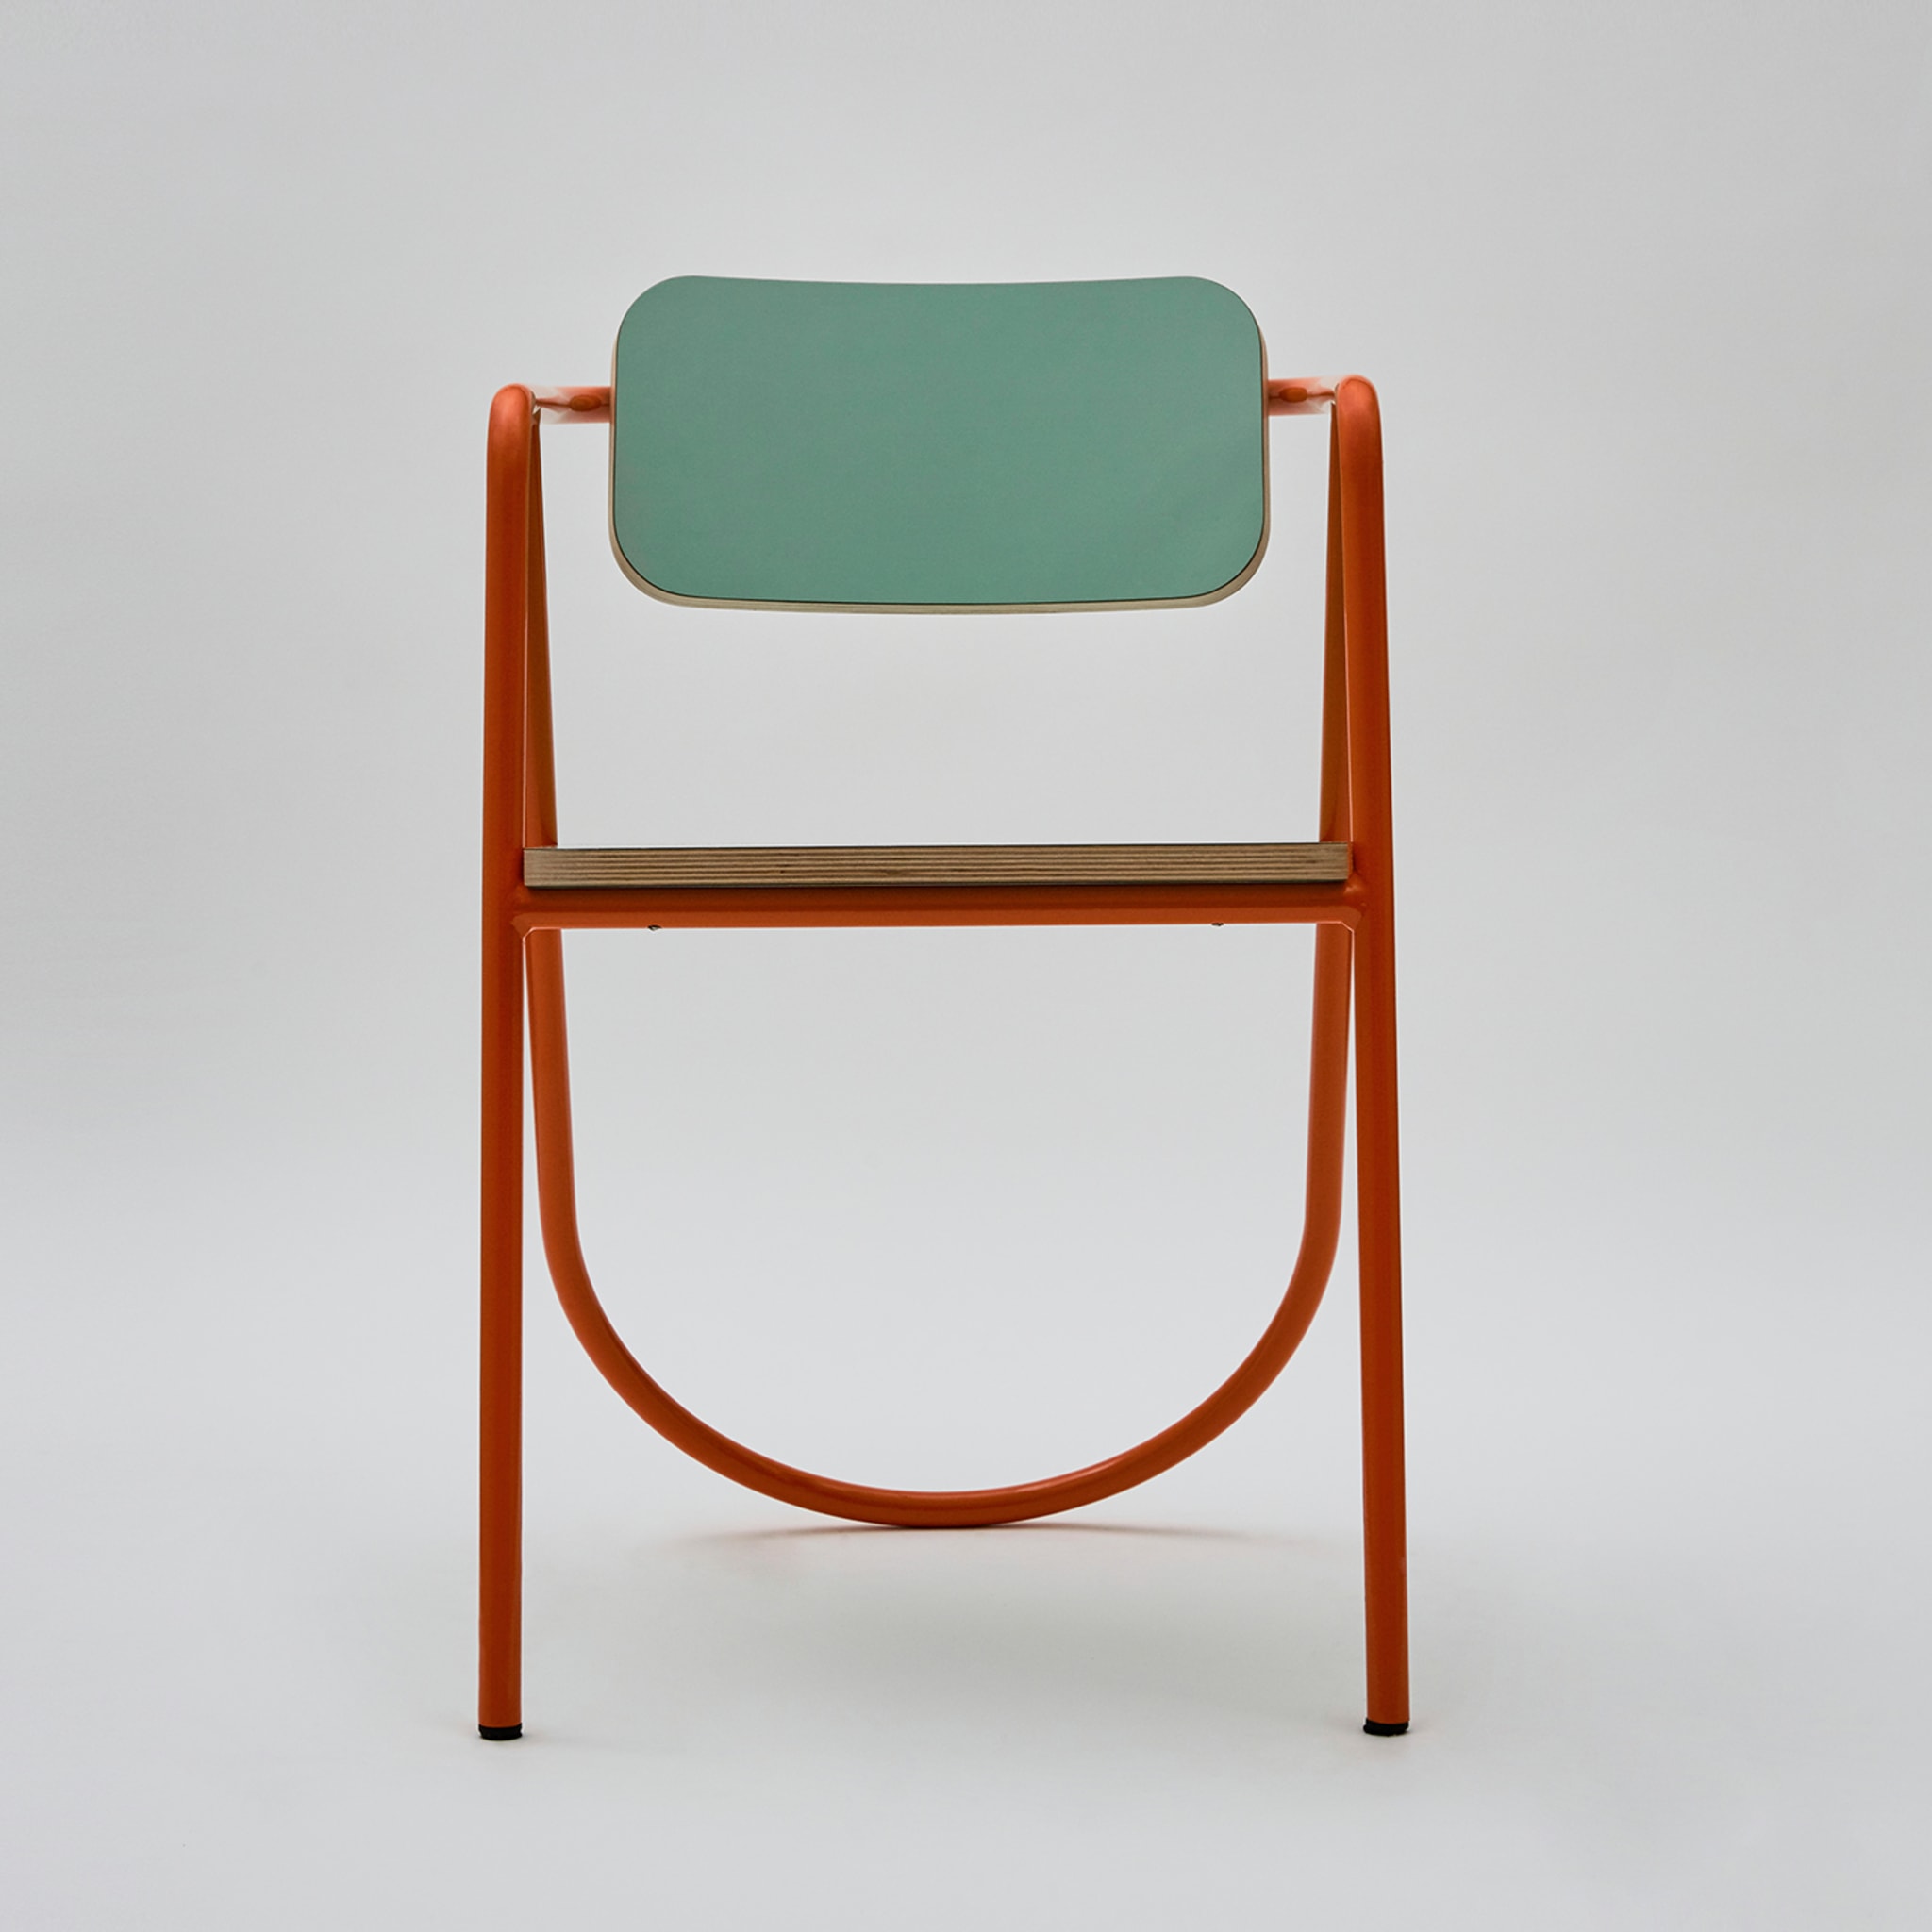 La Misciù Orange & Teal Chair - Alternative view 4